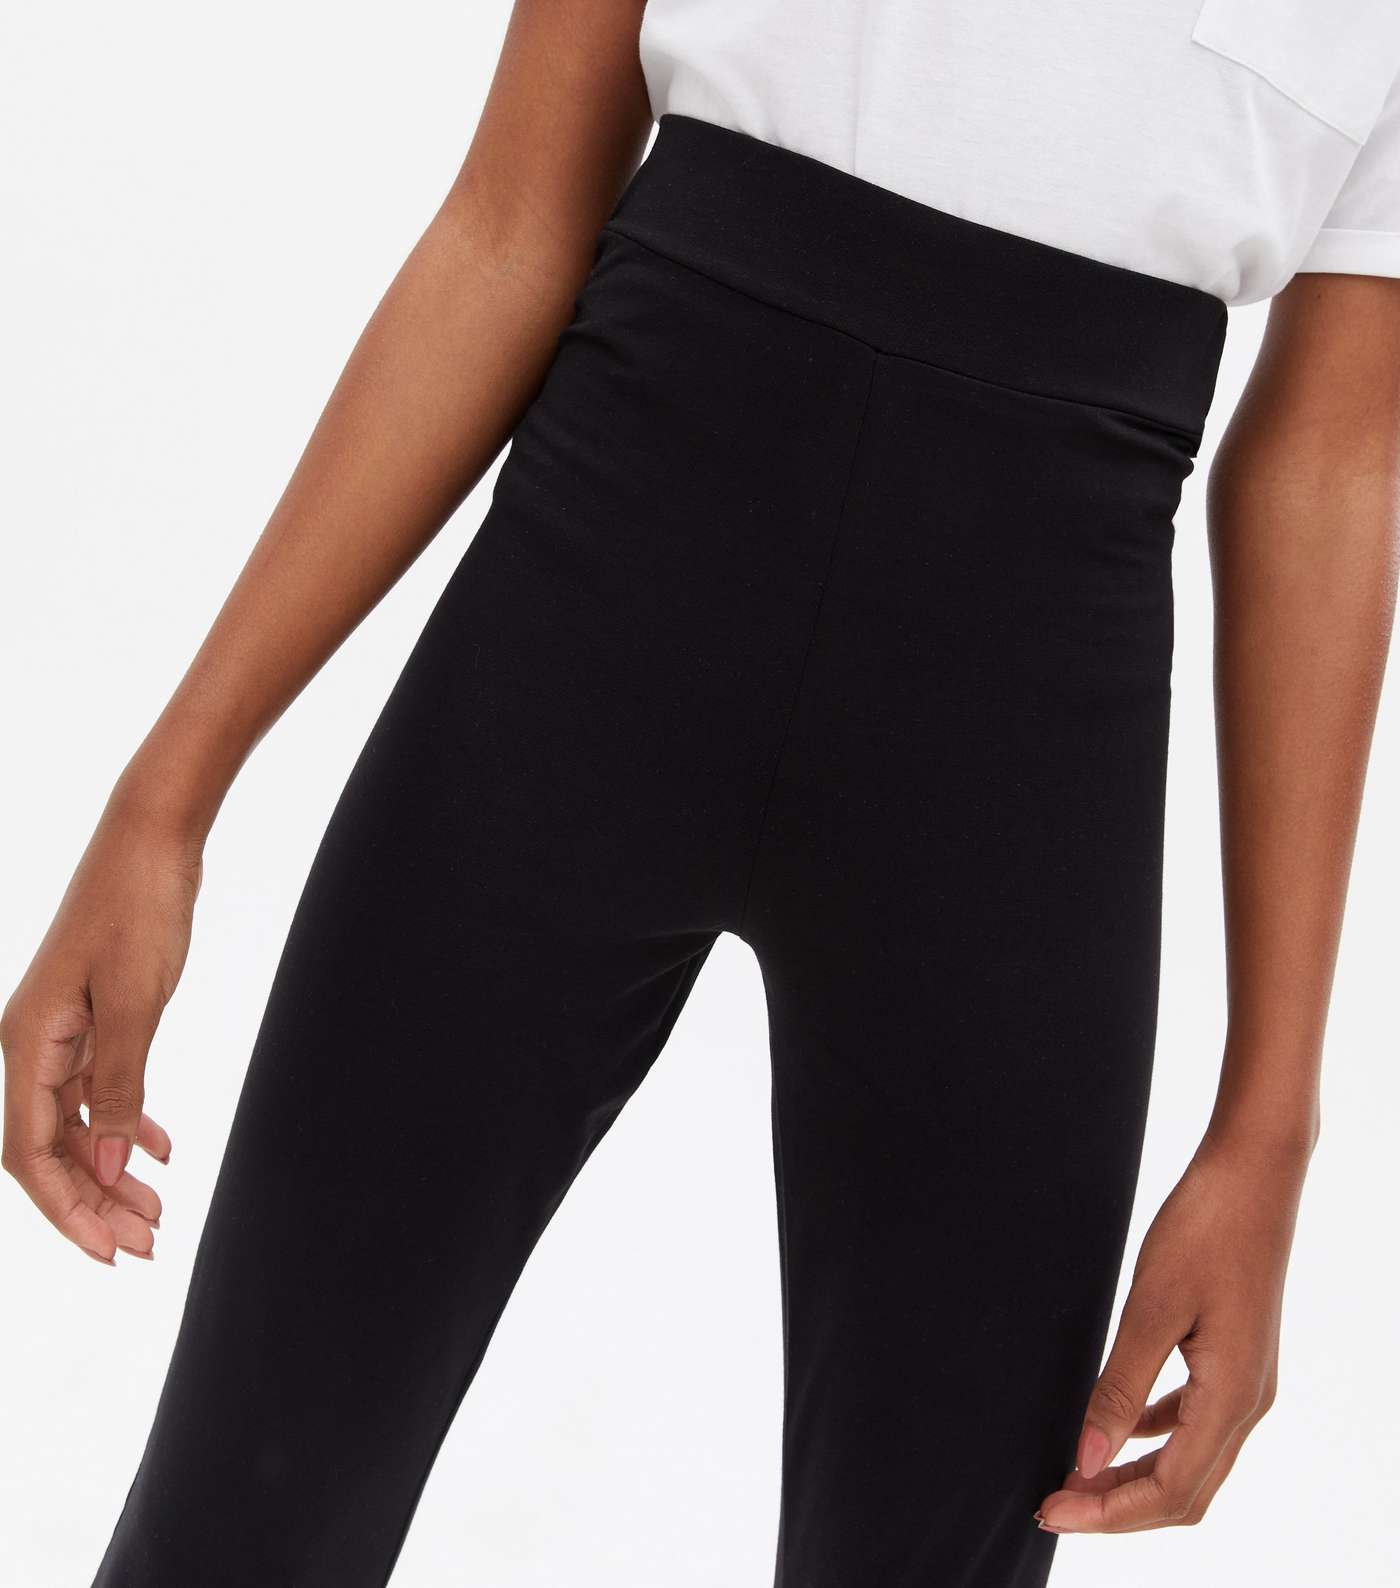 https://media2.newlookassets.com/i/newlook/817118901M2/girls/clothing/leggings/girls-black-ruched-high-waist-leggings.jpg?strip=true&w=1400&qlt=60&fmt=jpeg